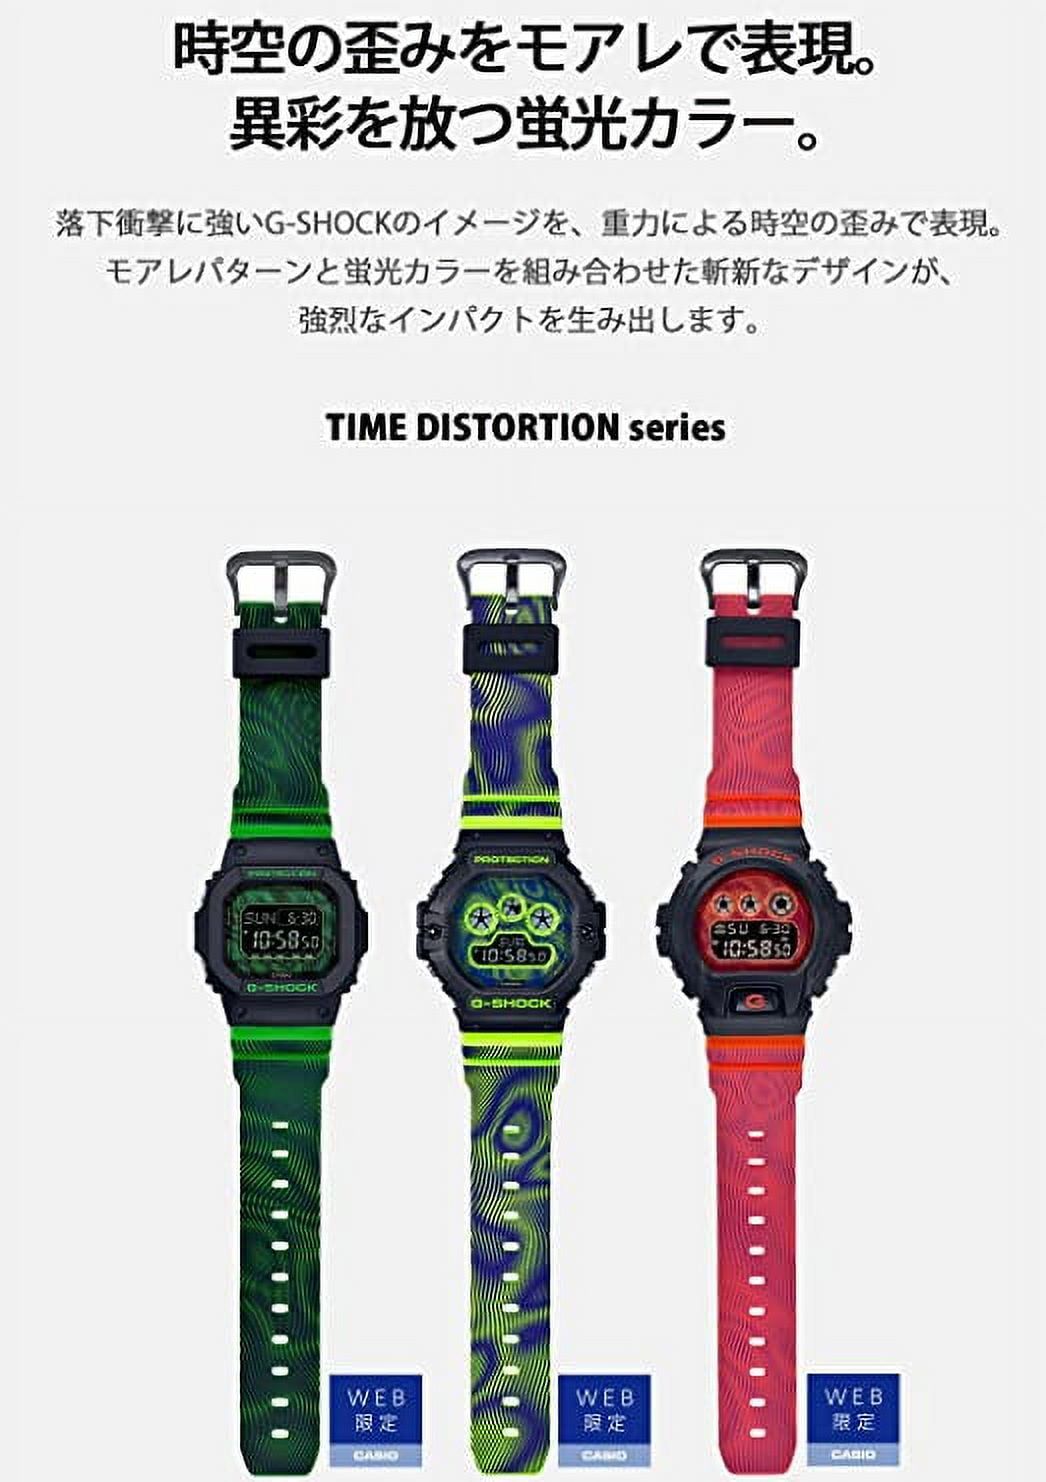 Casio Men's Watch G-shock Digital G Shock DW-5600td-3 DW5600 Dw-5600 Green  200m